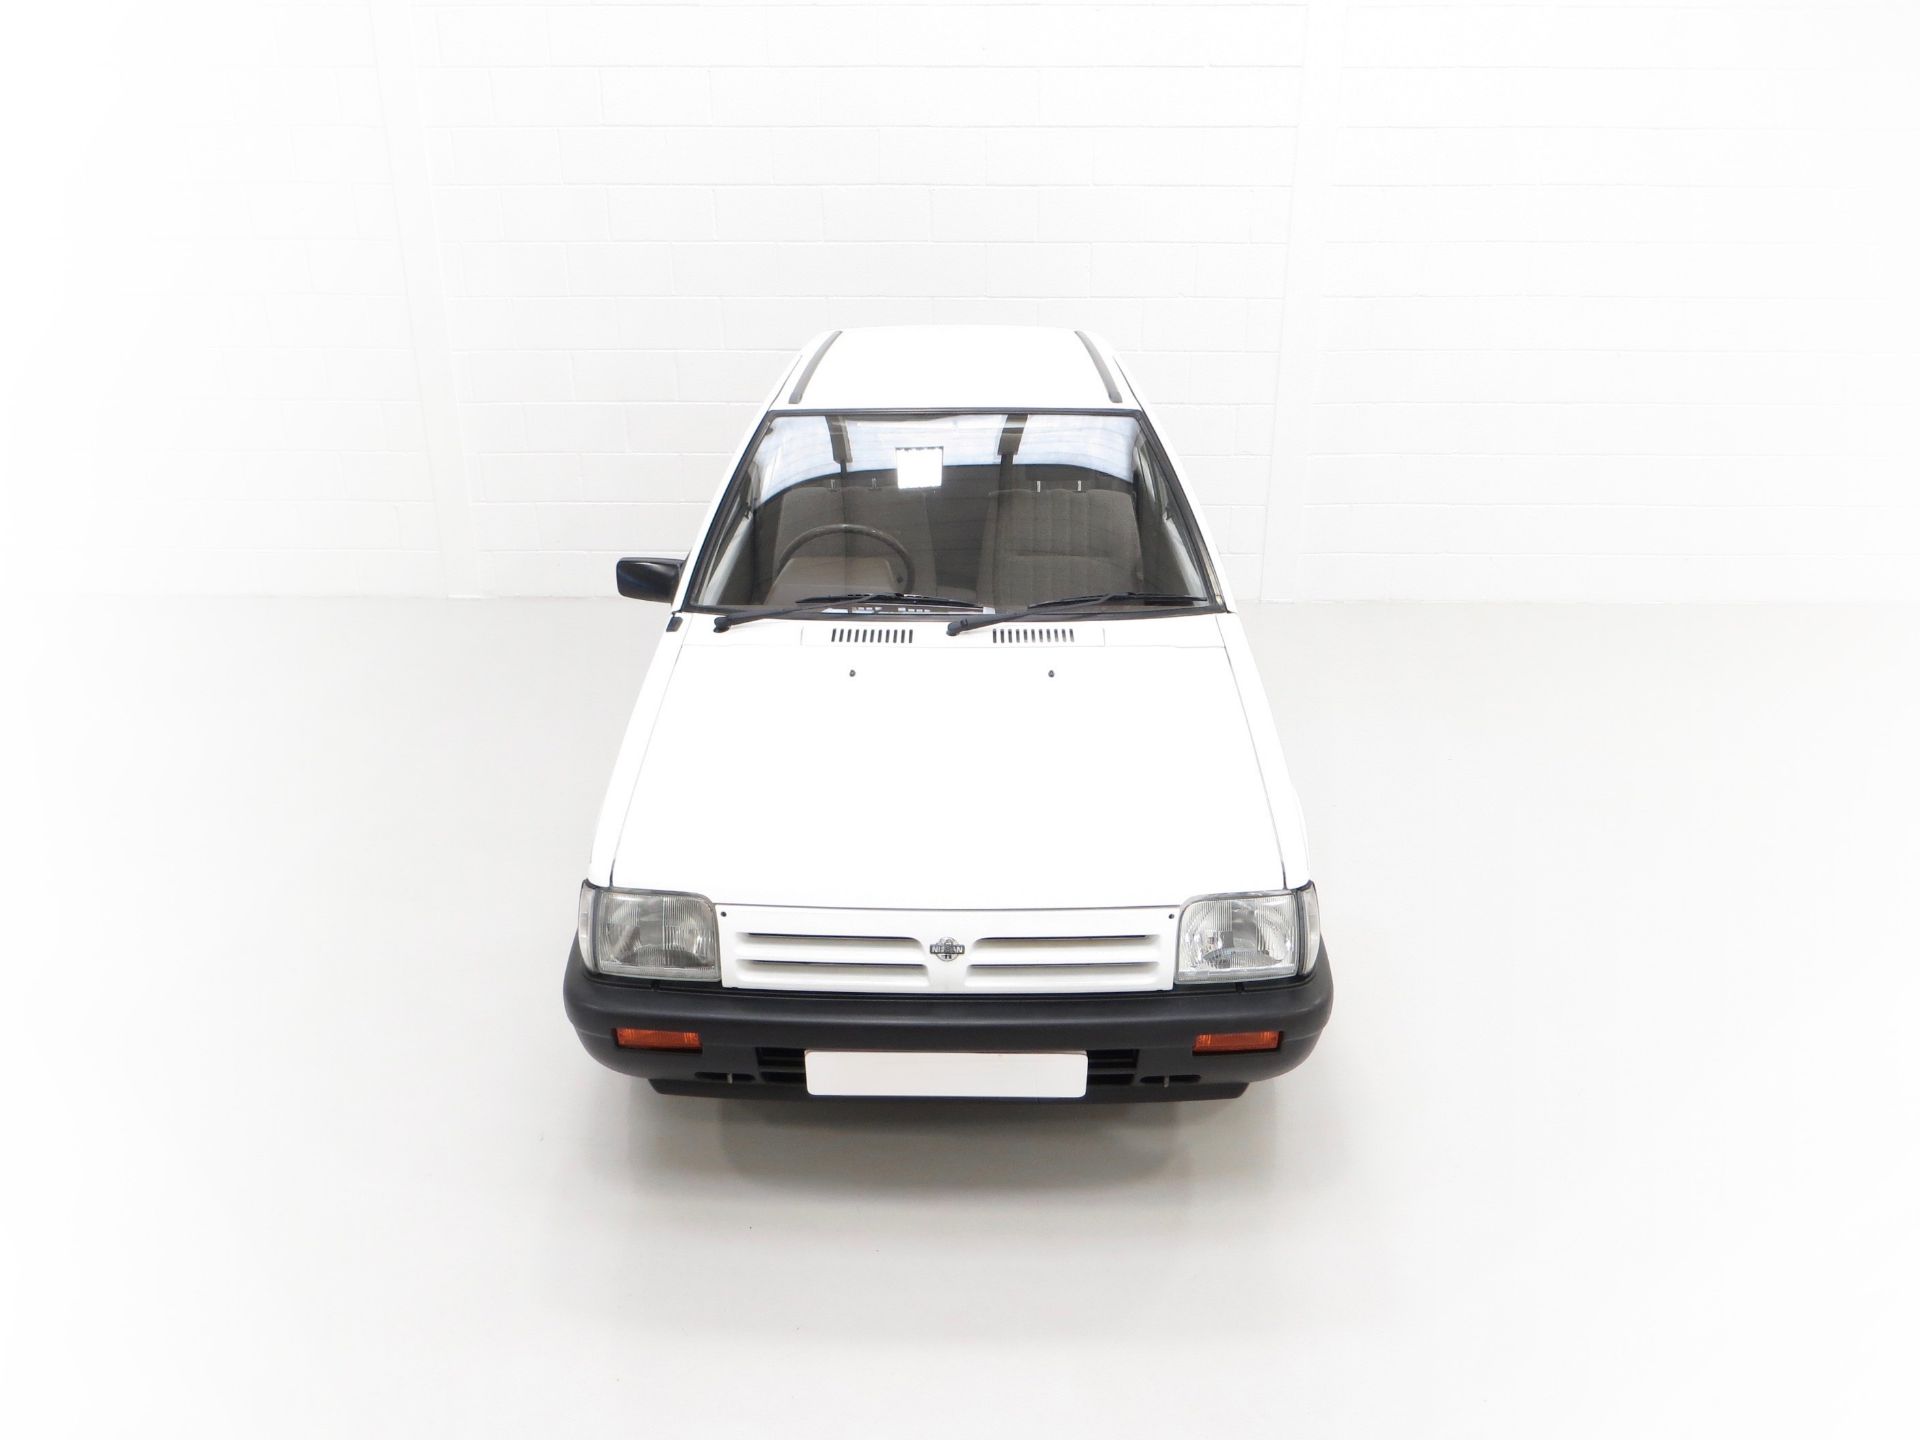 1991, Nissan Micra 1.0 Premium - Image 58 of 118